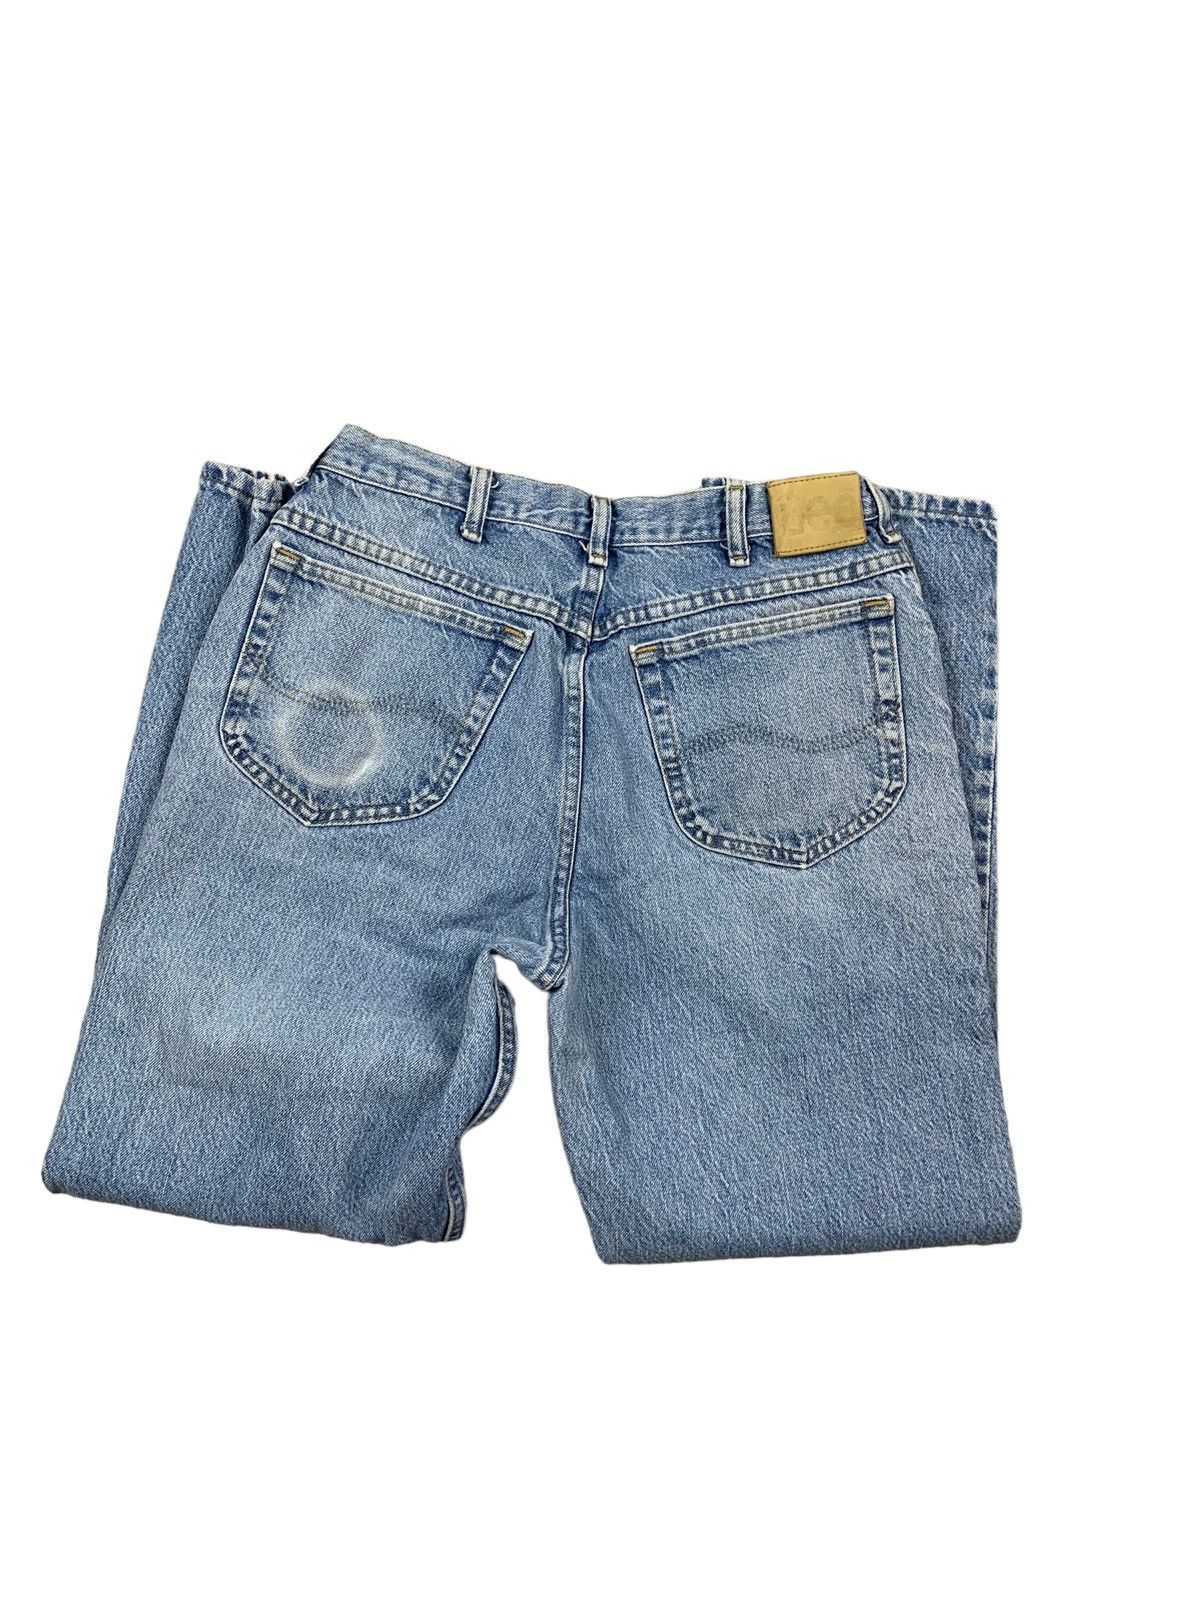 Vintage Vintage 1990s Lee essential blue jeans | Grailed